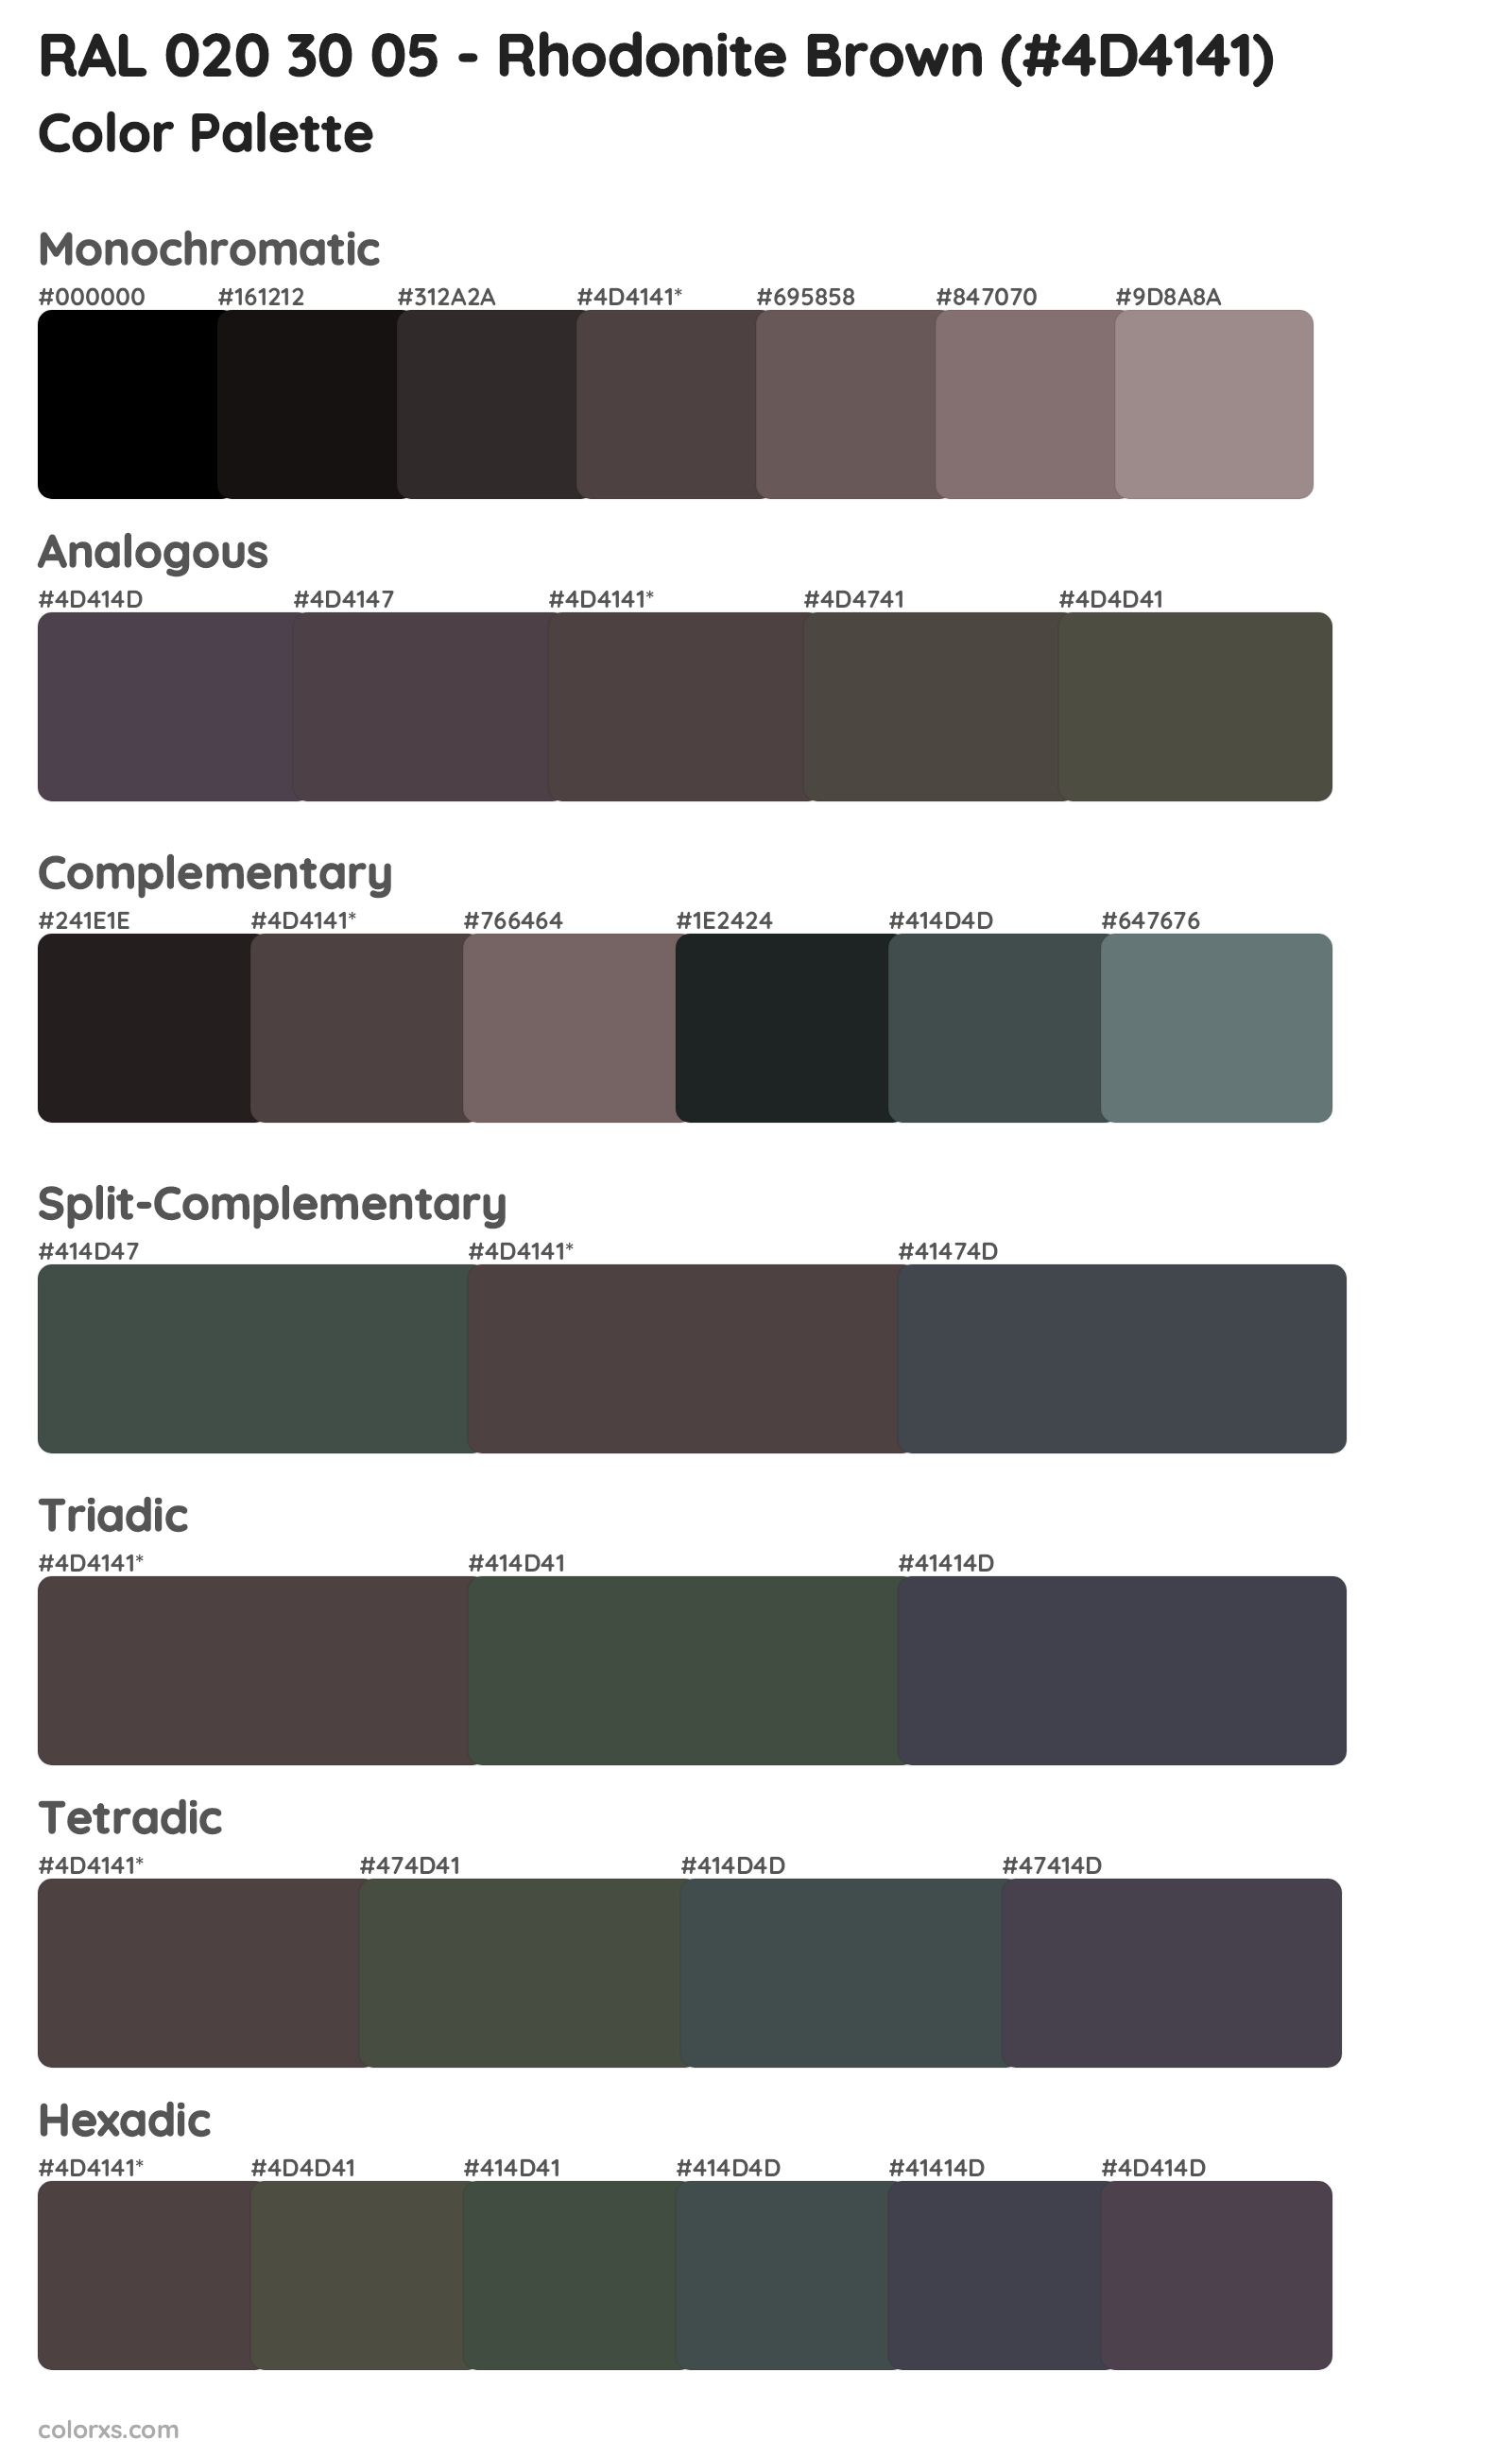 RAL 020 30 05 - Rhodonite Brown Color Scheme Palettes